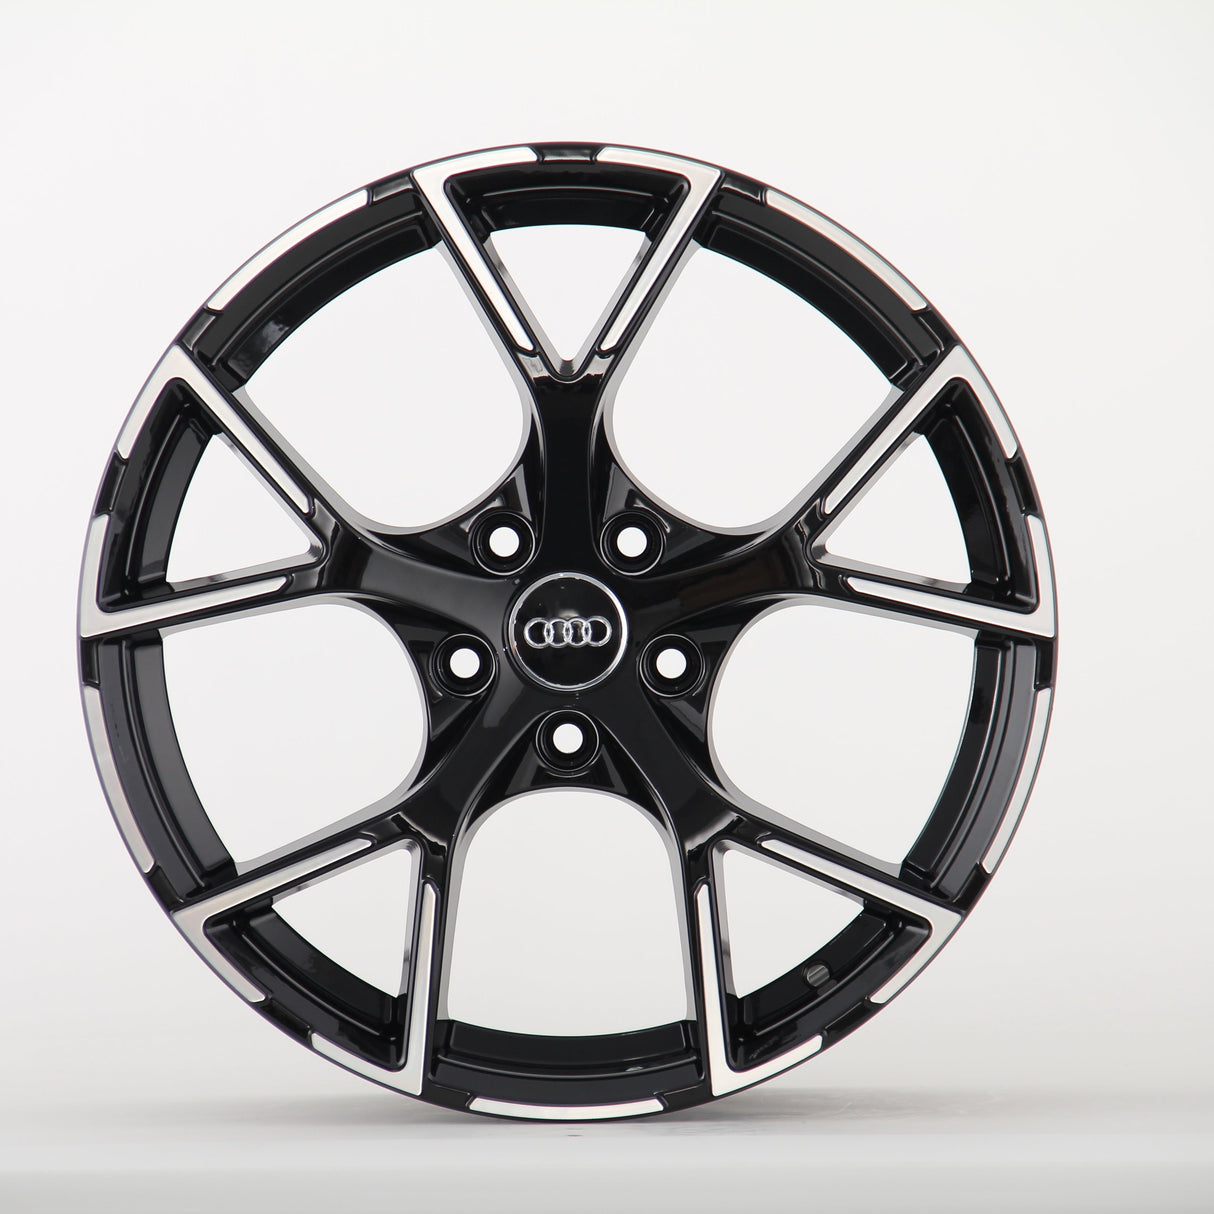 A5 - B9: 17" Diamond Cut RS3 Style Alloy Wheels 16+